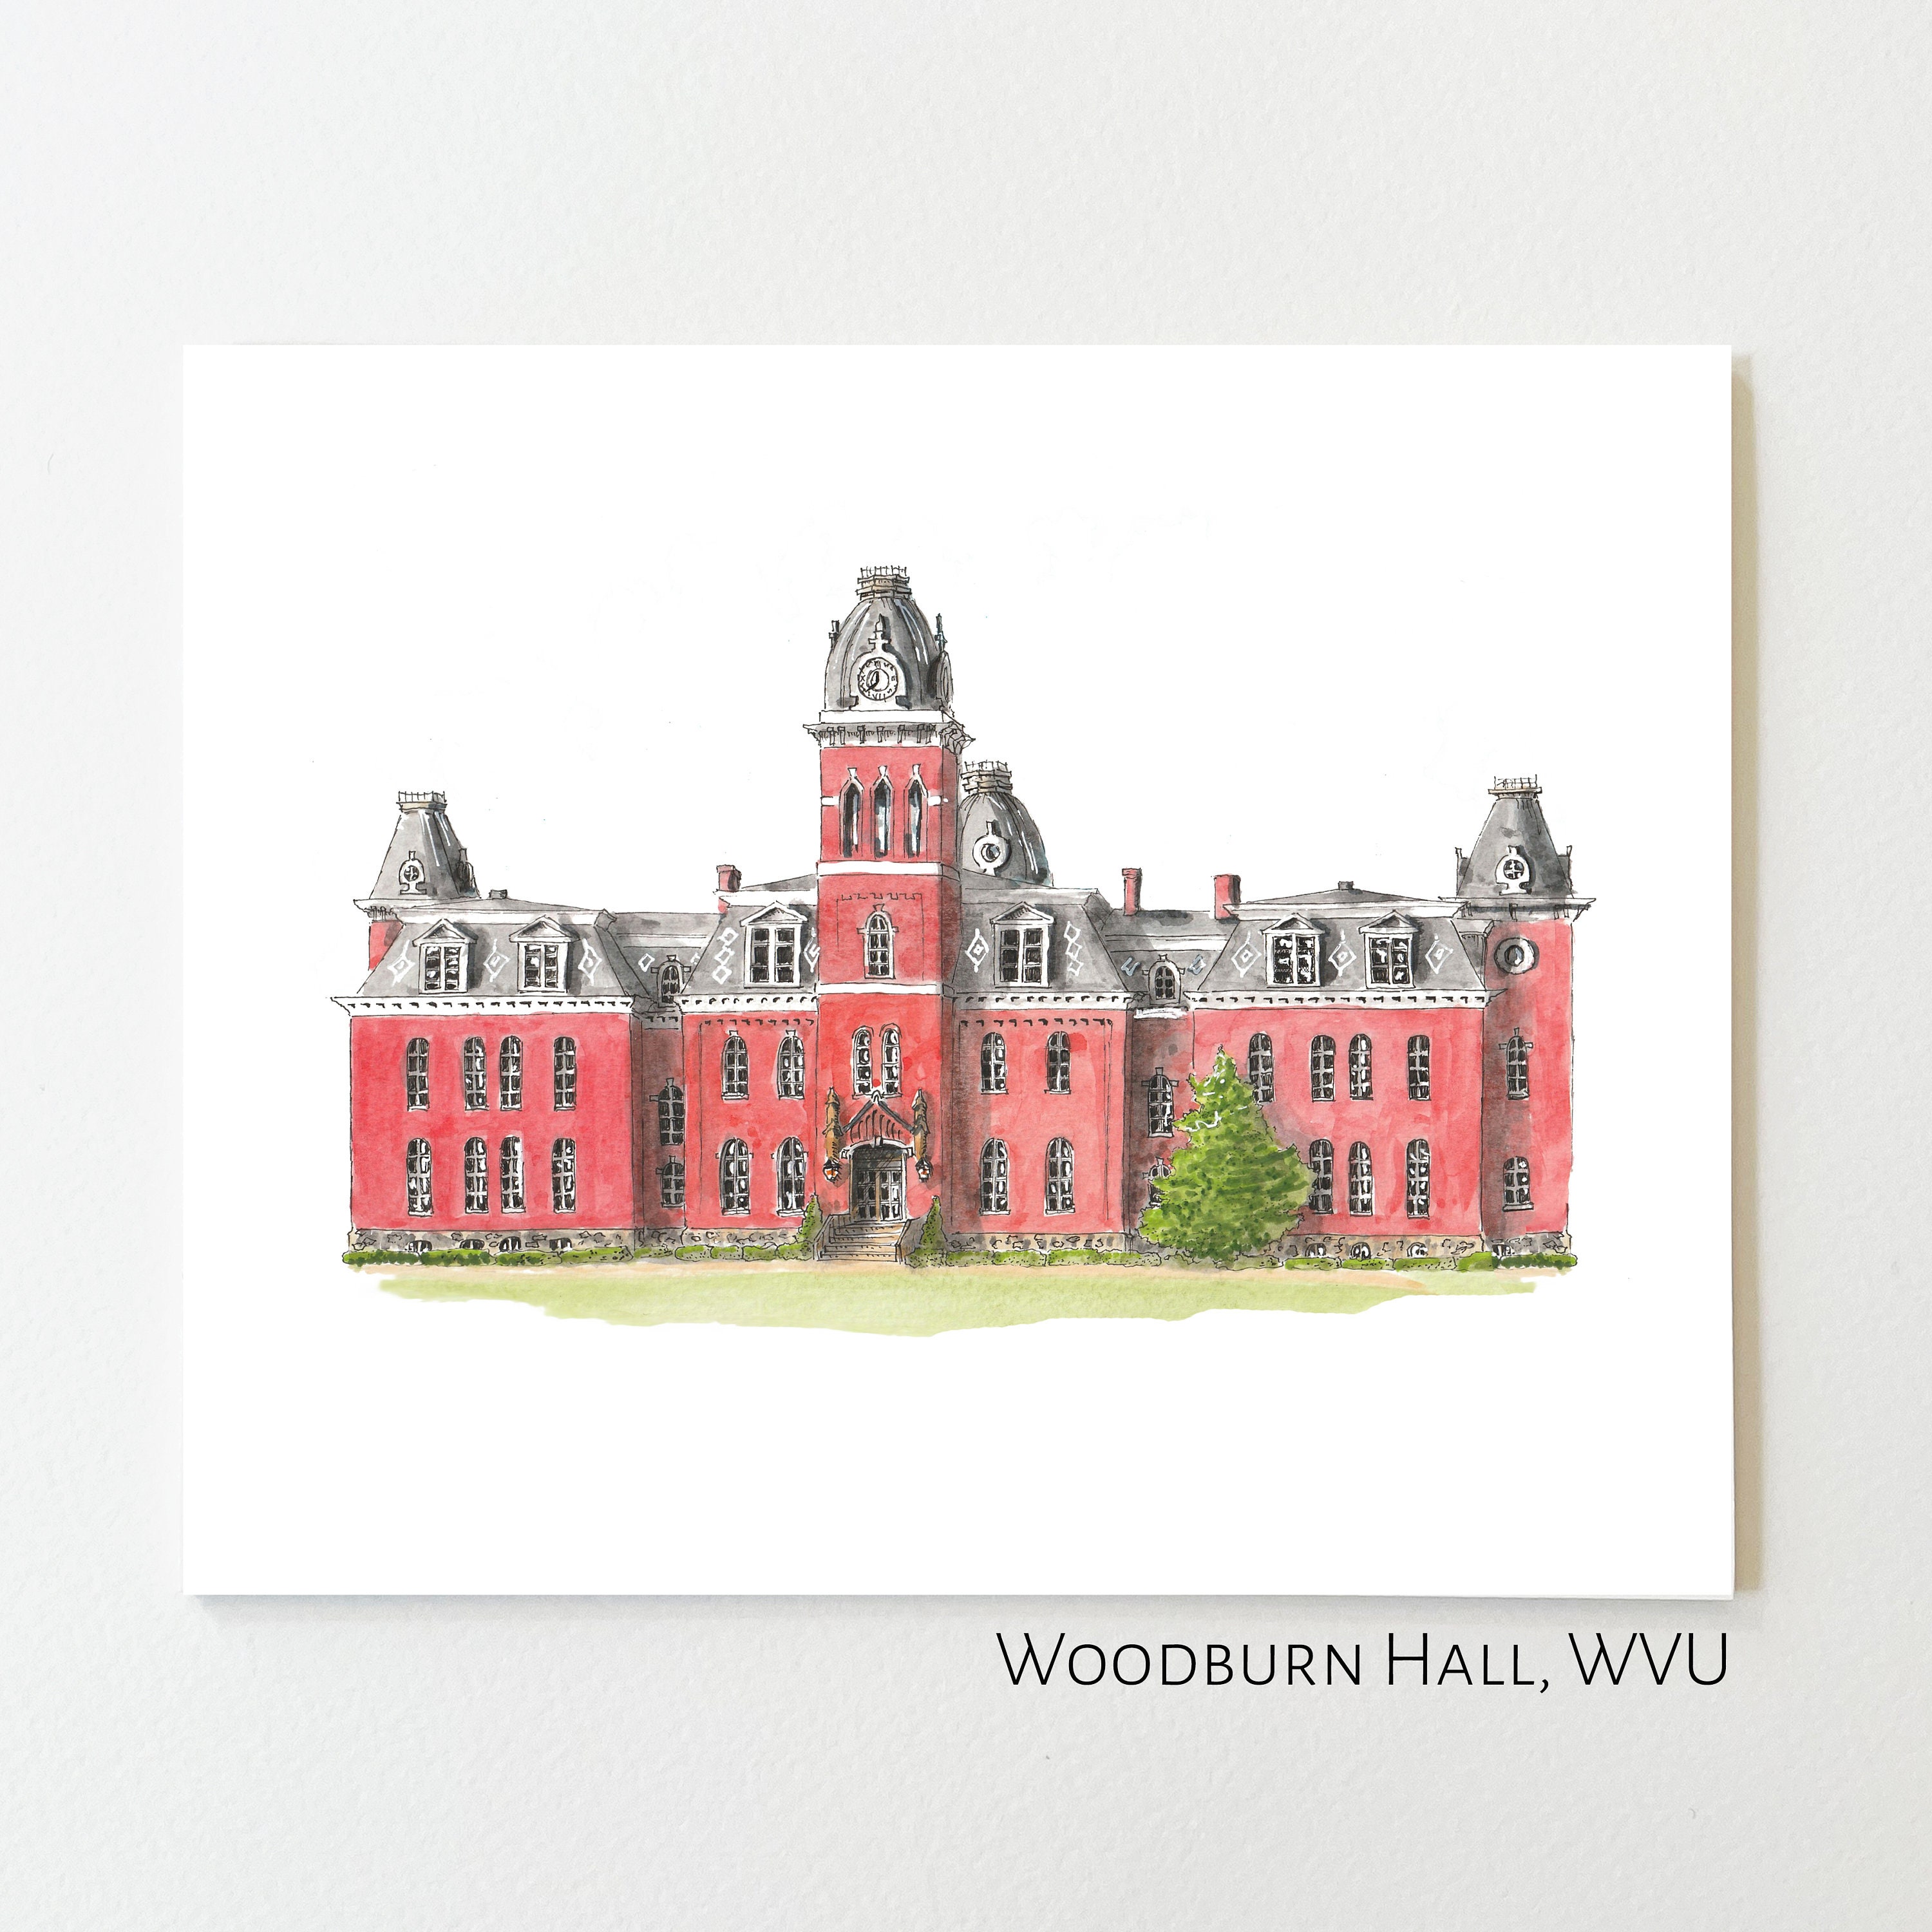 WVU Woodburn Hall 16X24 Canvas Print